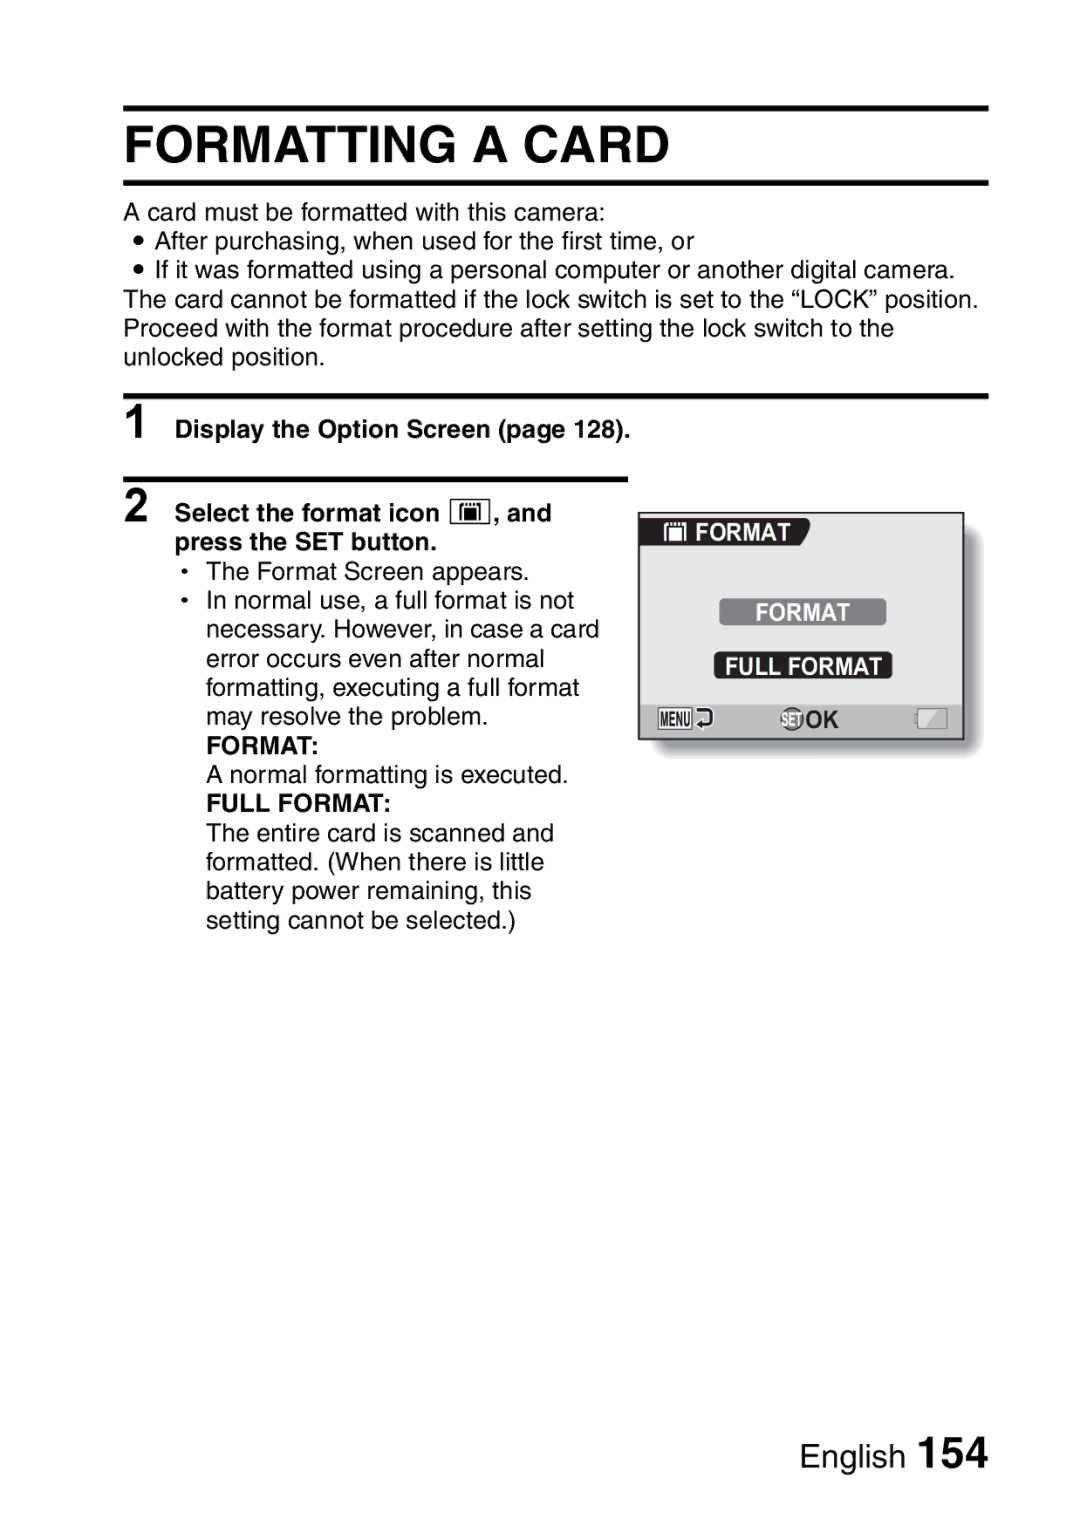 Sanyo VPC-HD2EX, VPC-H2GX instruction manual Formatting a Card, Format Full Format 